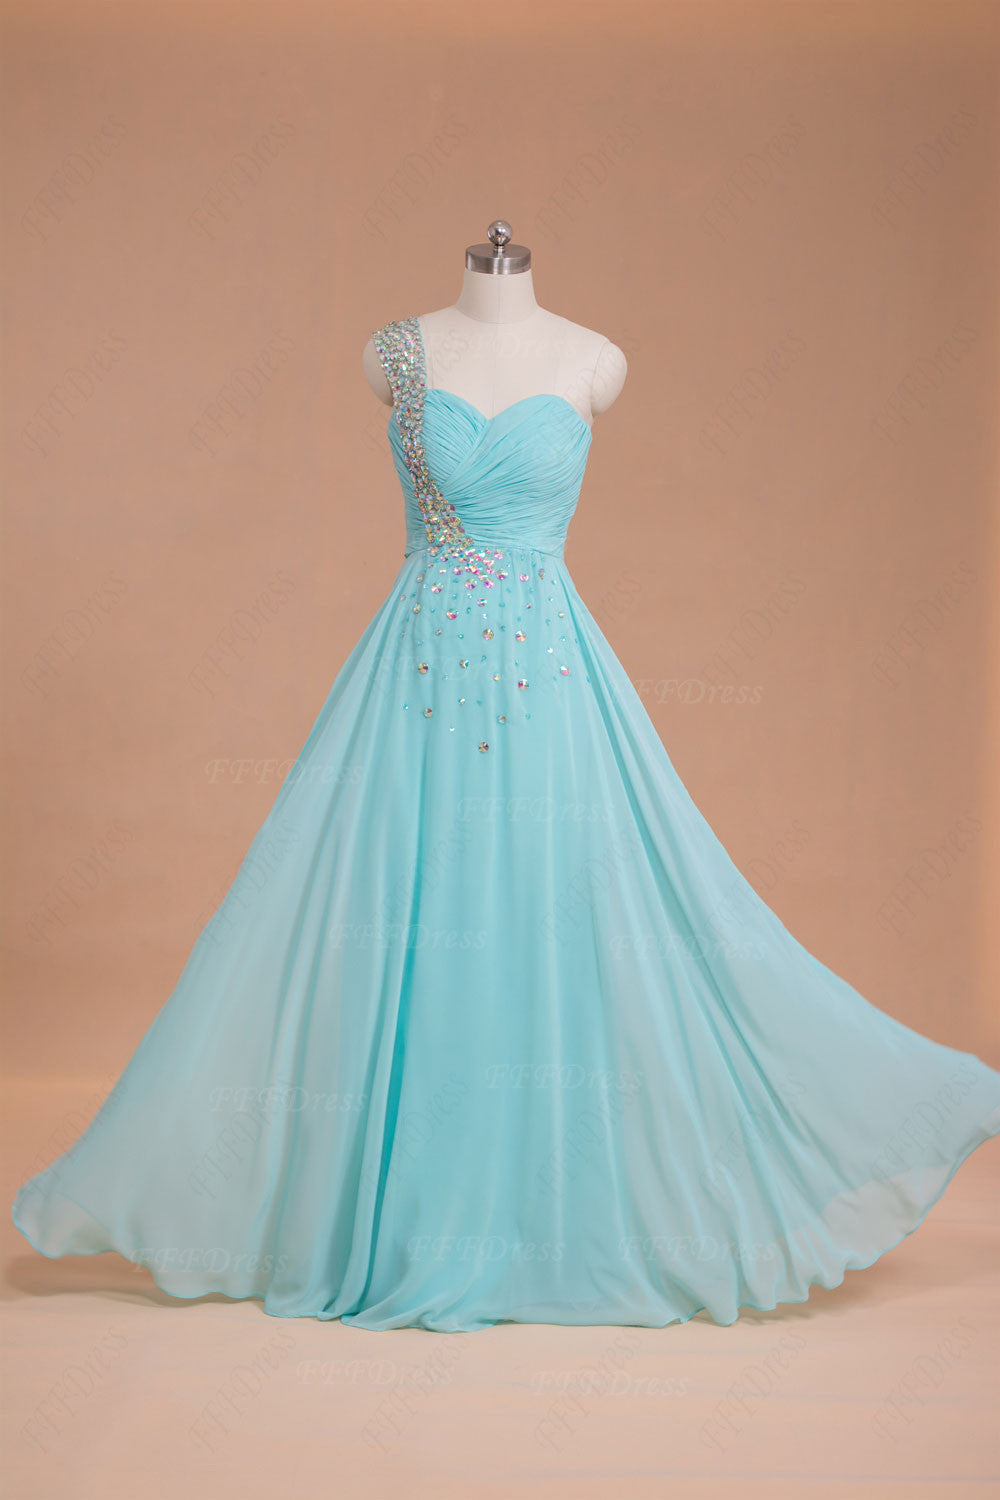 Light blue crystals long prom dresses